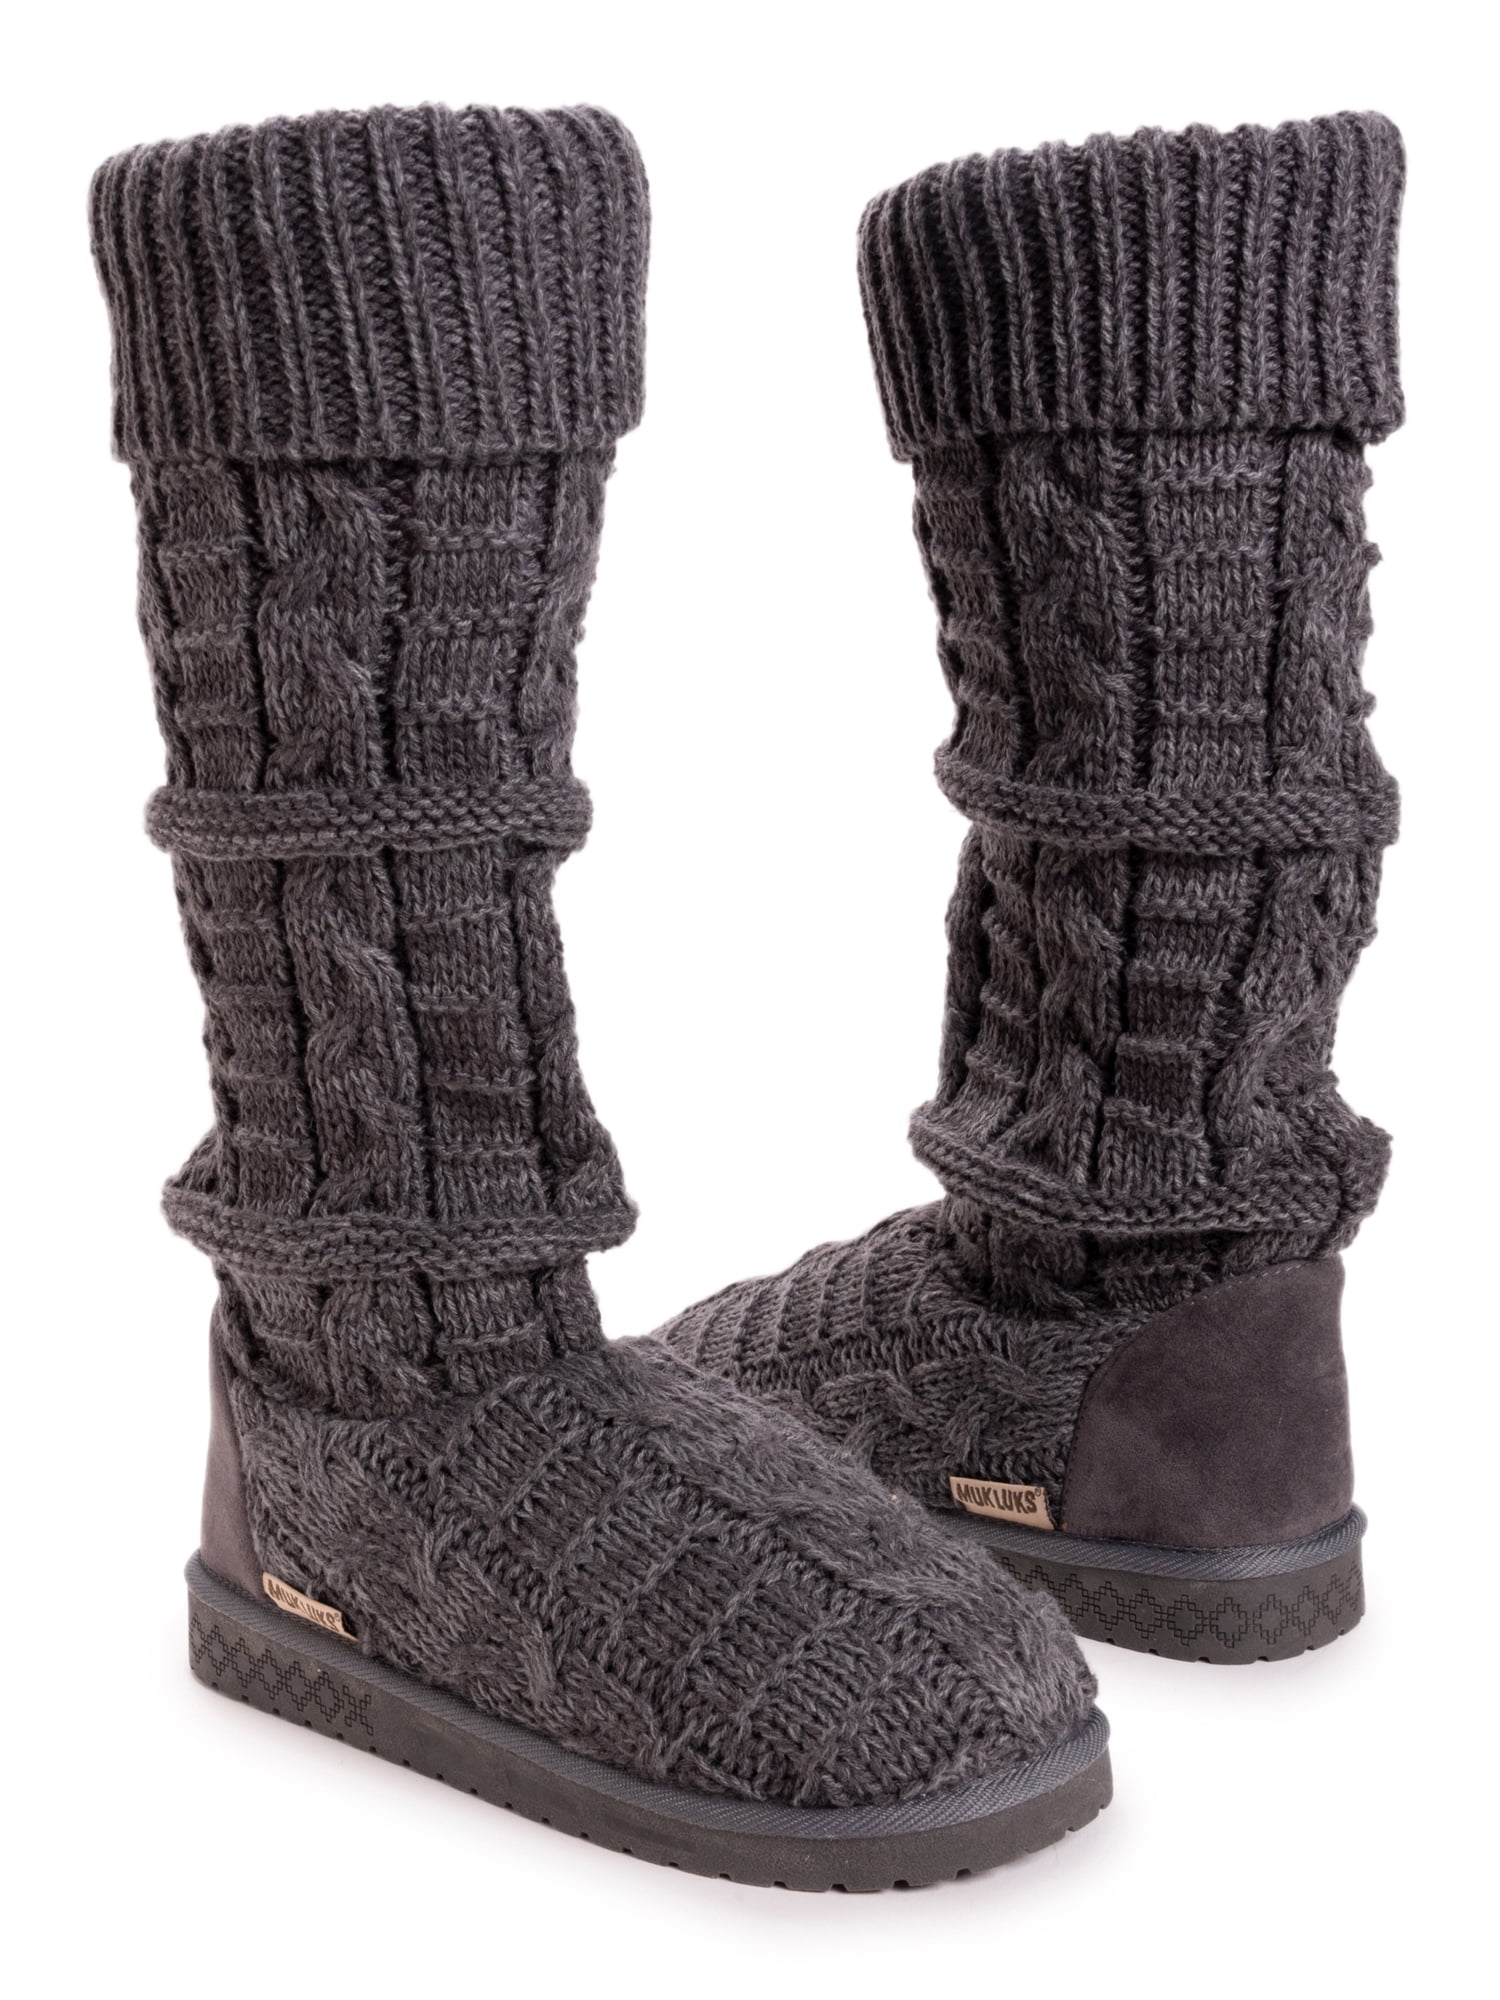 Boot (Women\'s) Sweater Slouch Knit Luks Shelly Muk Marl